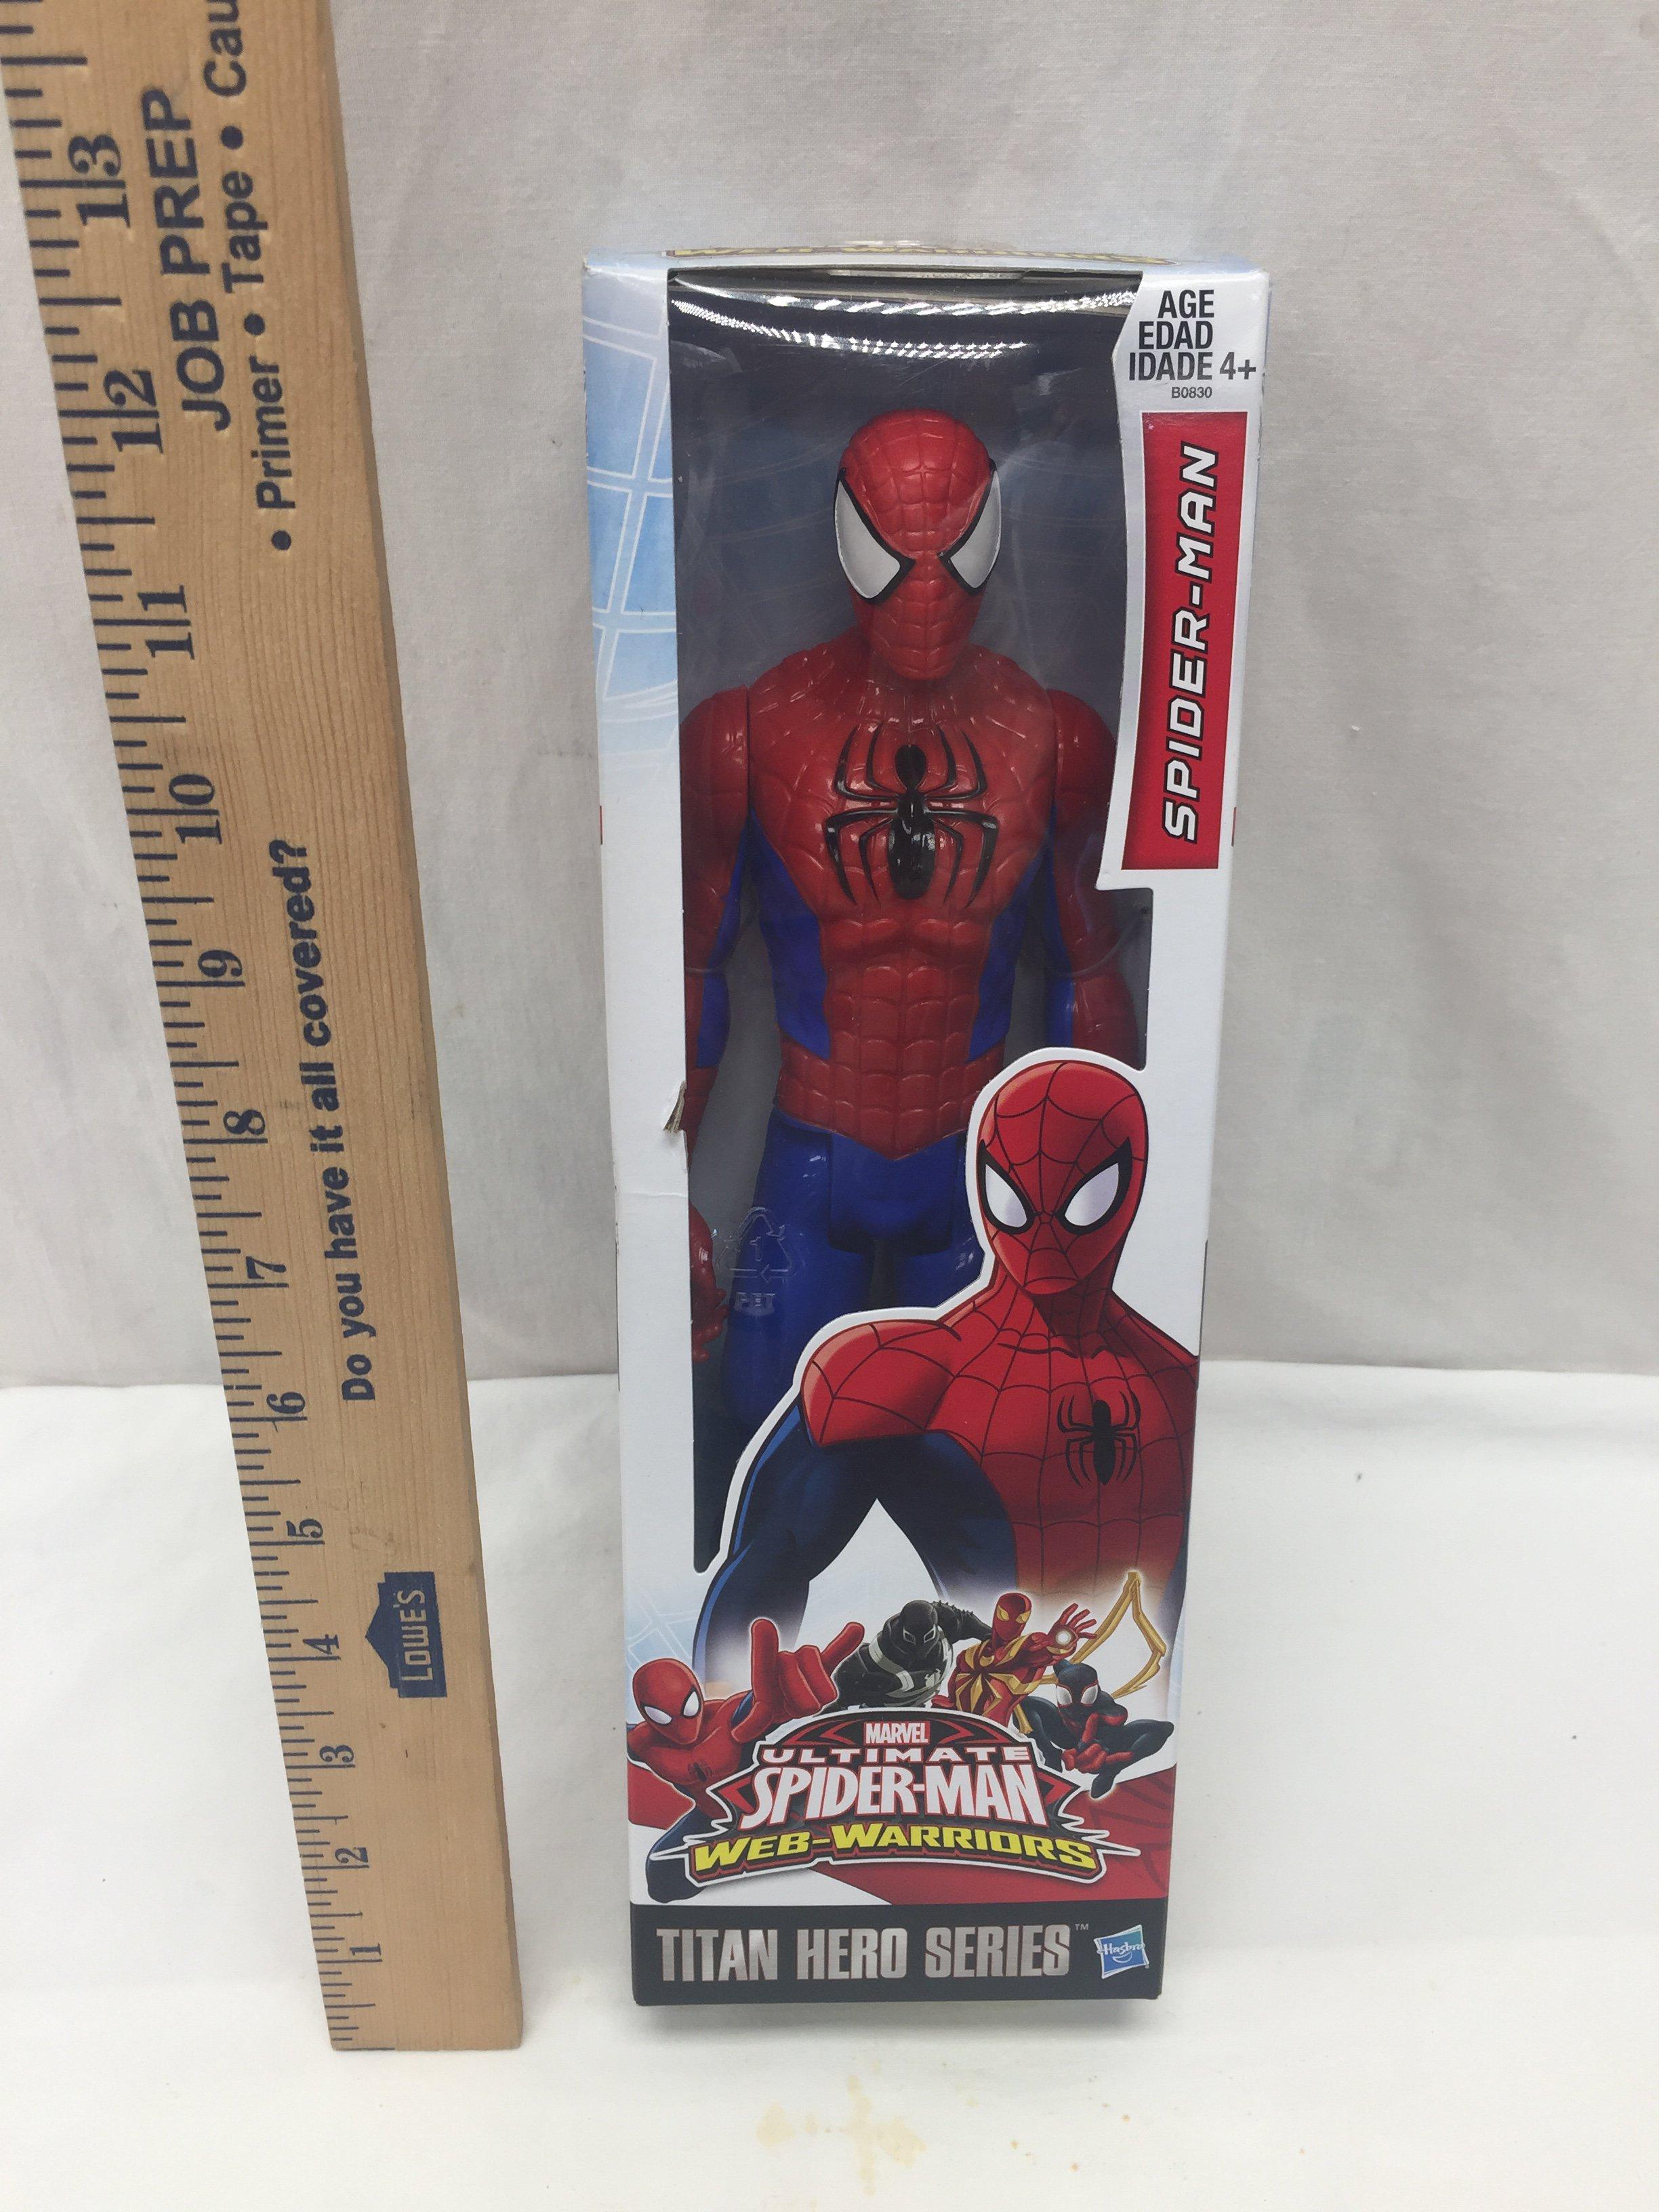 Marvel Ultimate Spider Man Web Warriors Figure